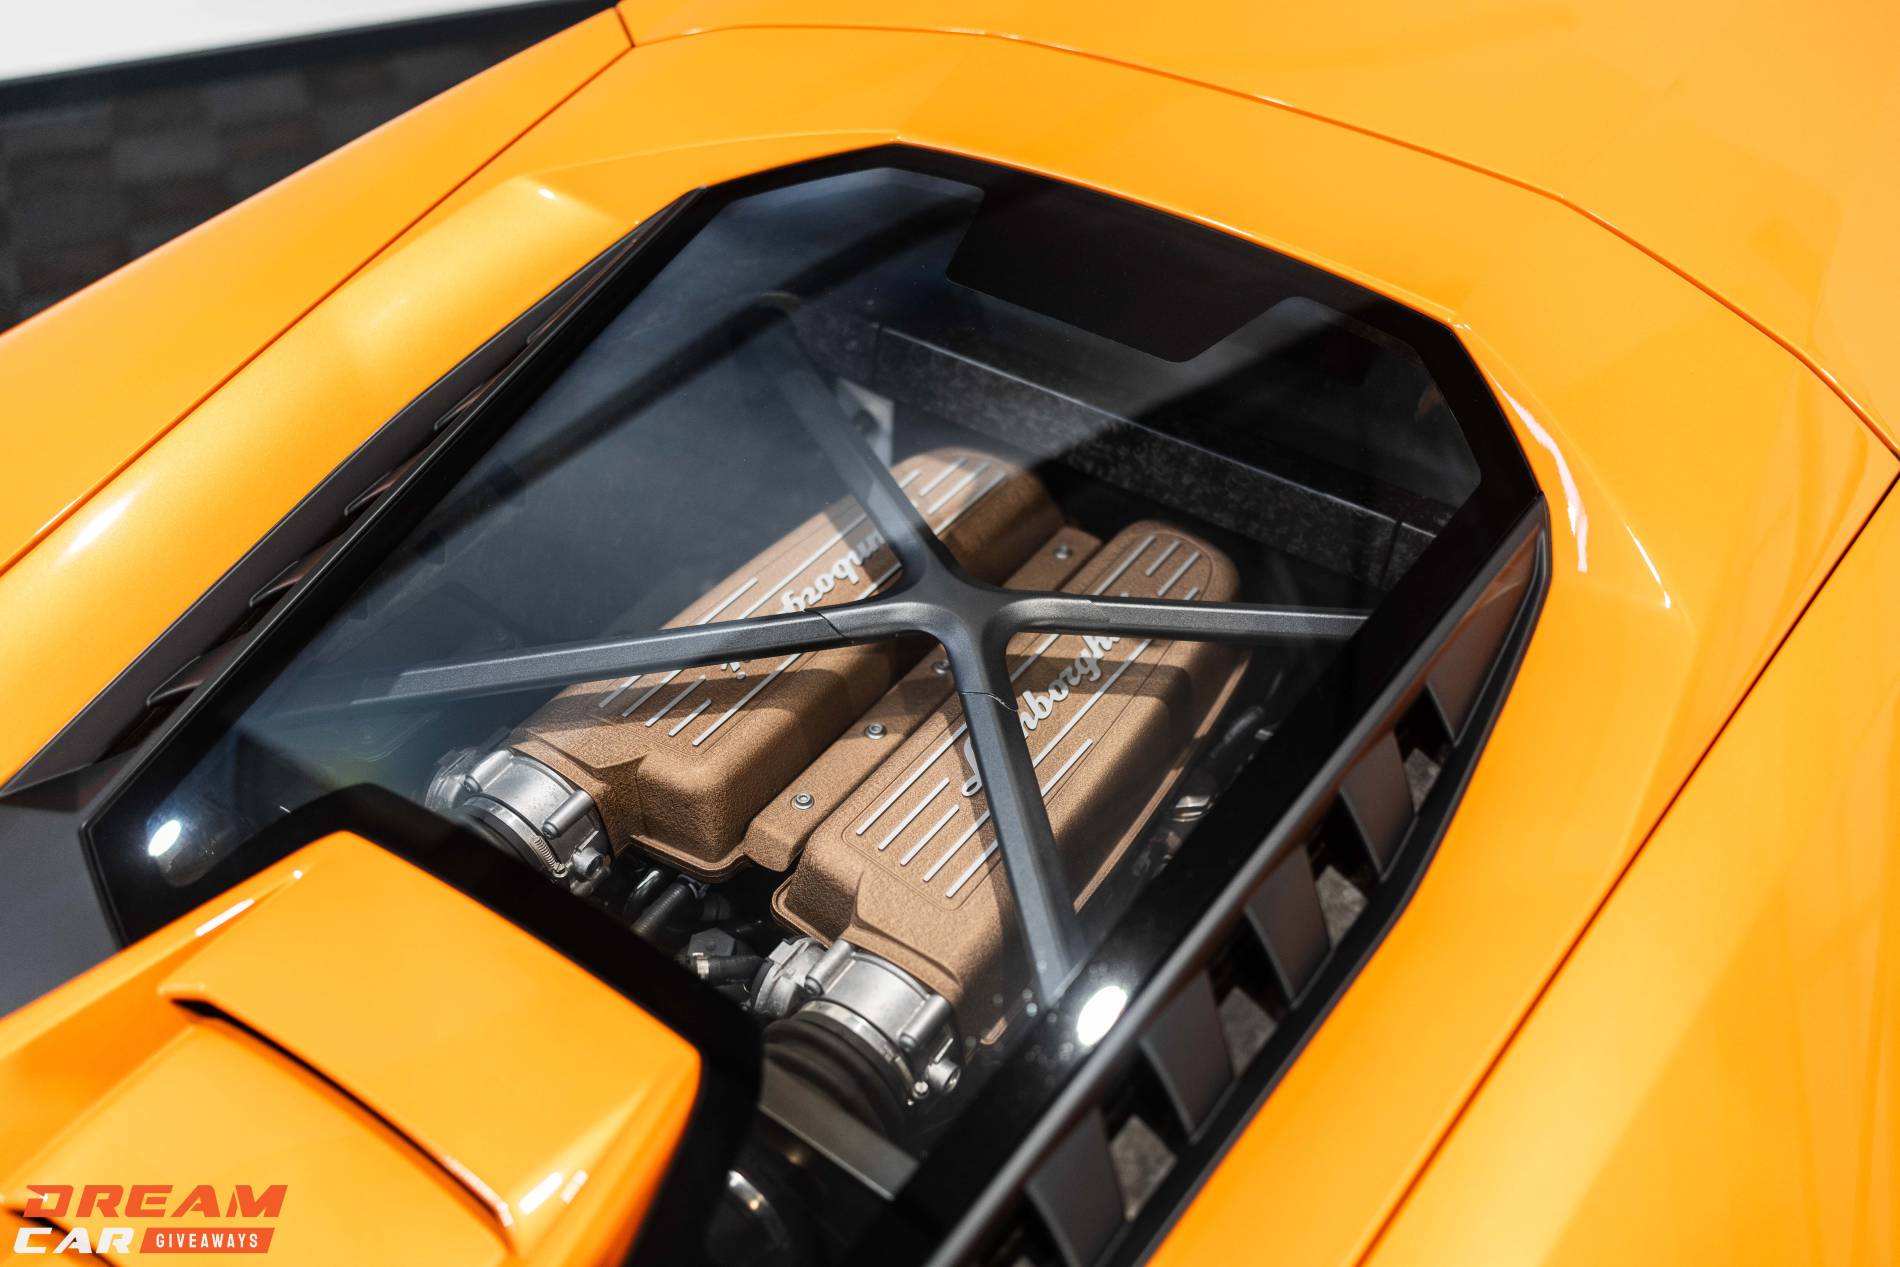 Lamborghini Huracan Performante & £10,000 or £160,000 Tax Free